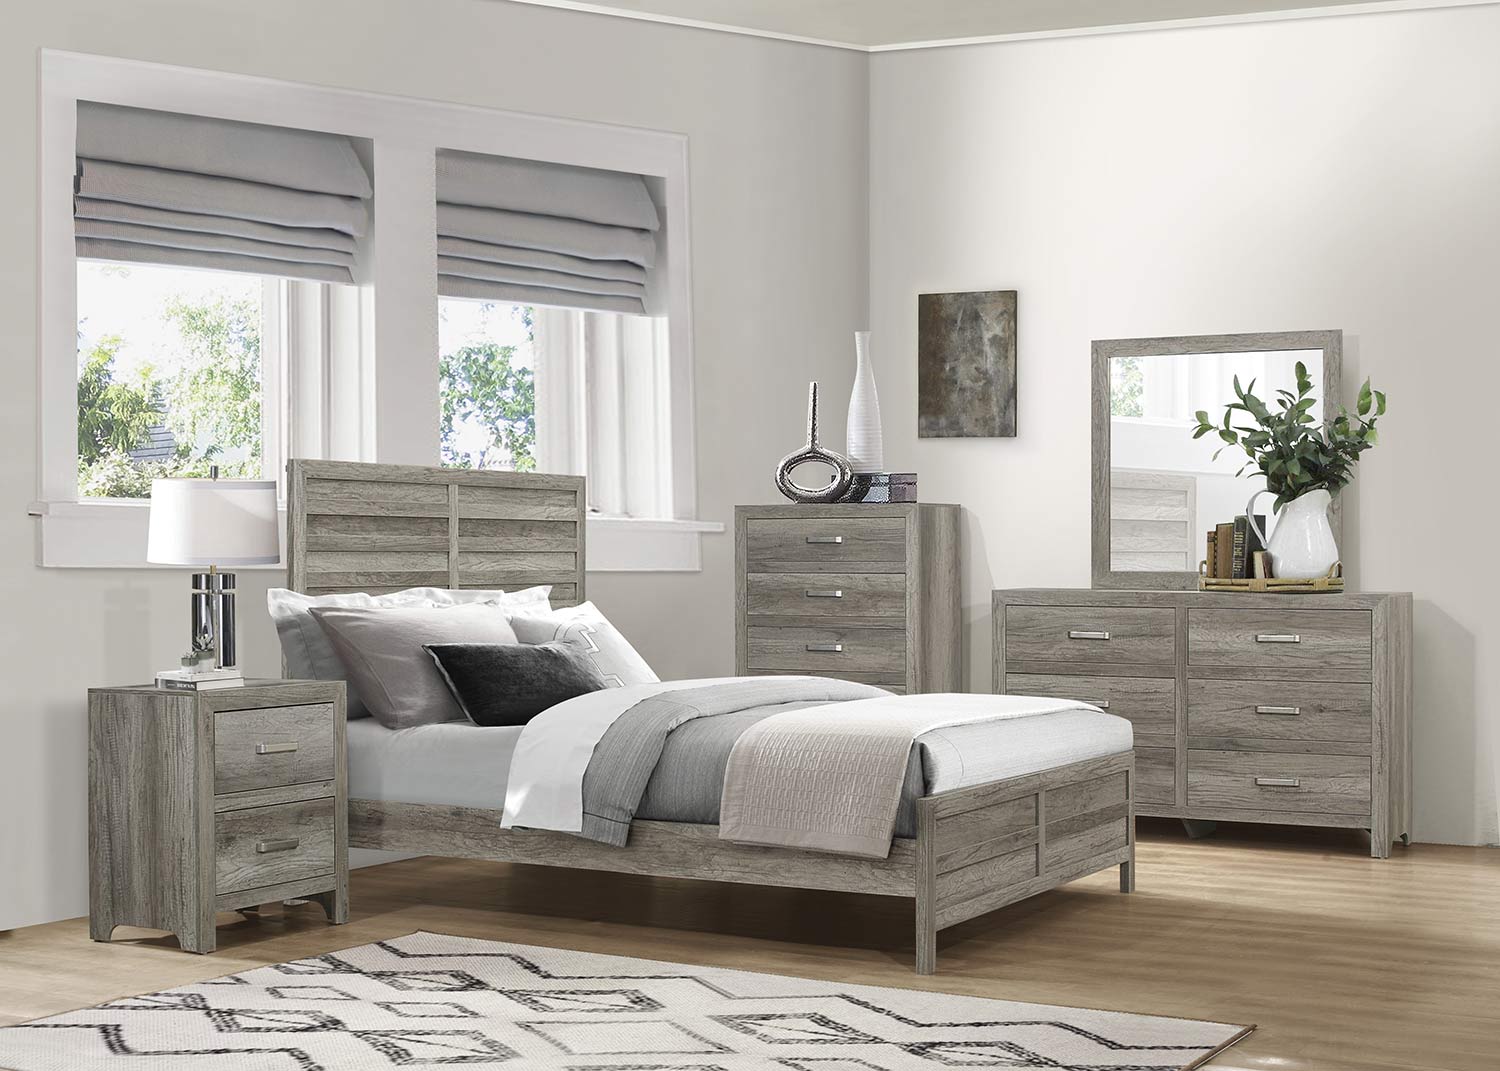 Homelegance Mandan Bedroom Set - Weathered Gray